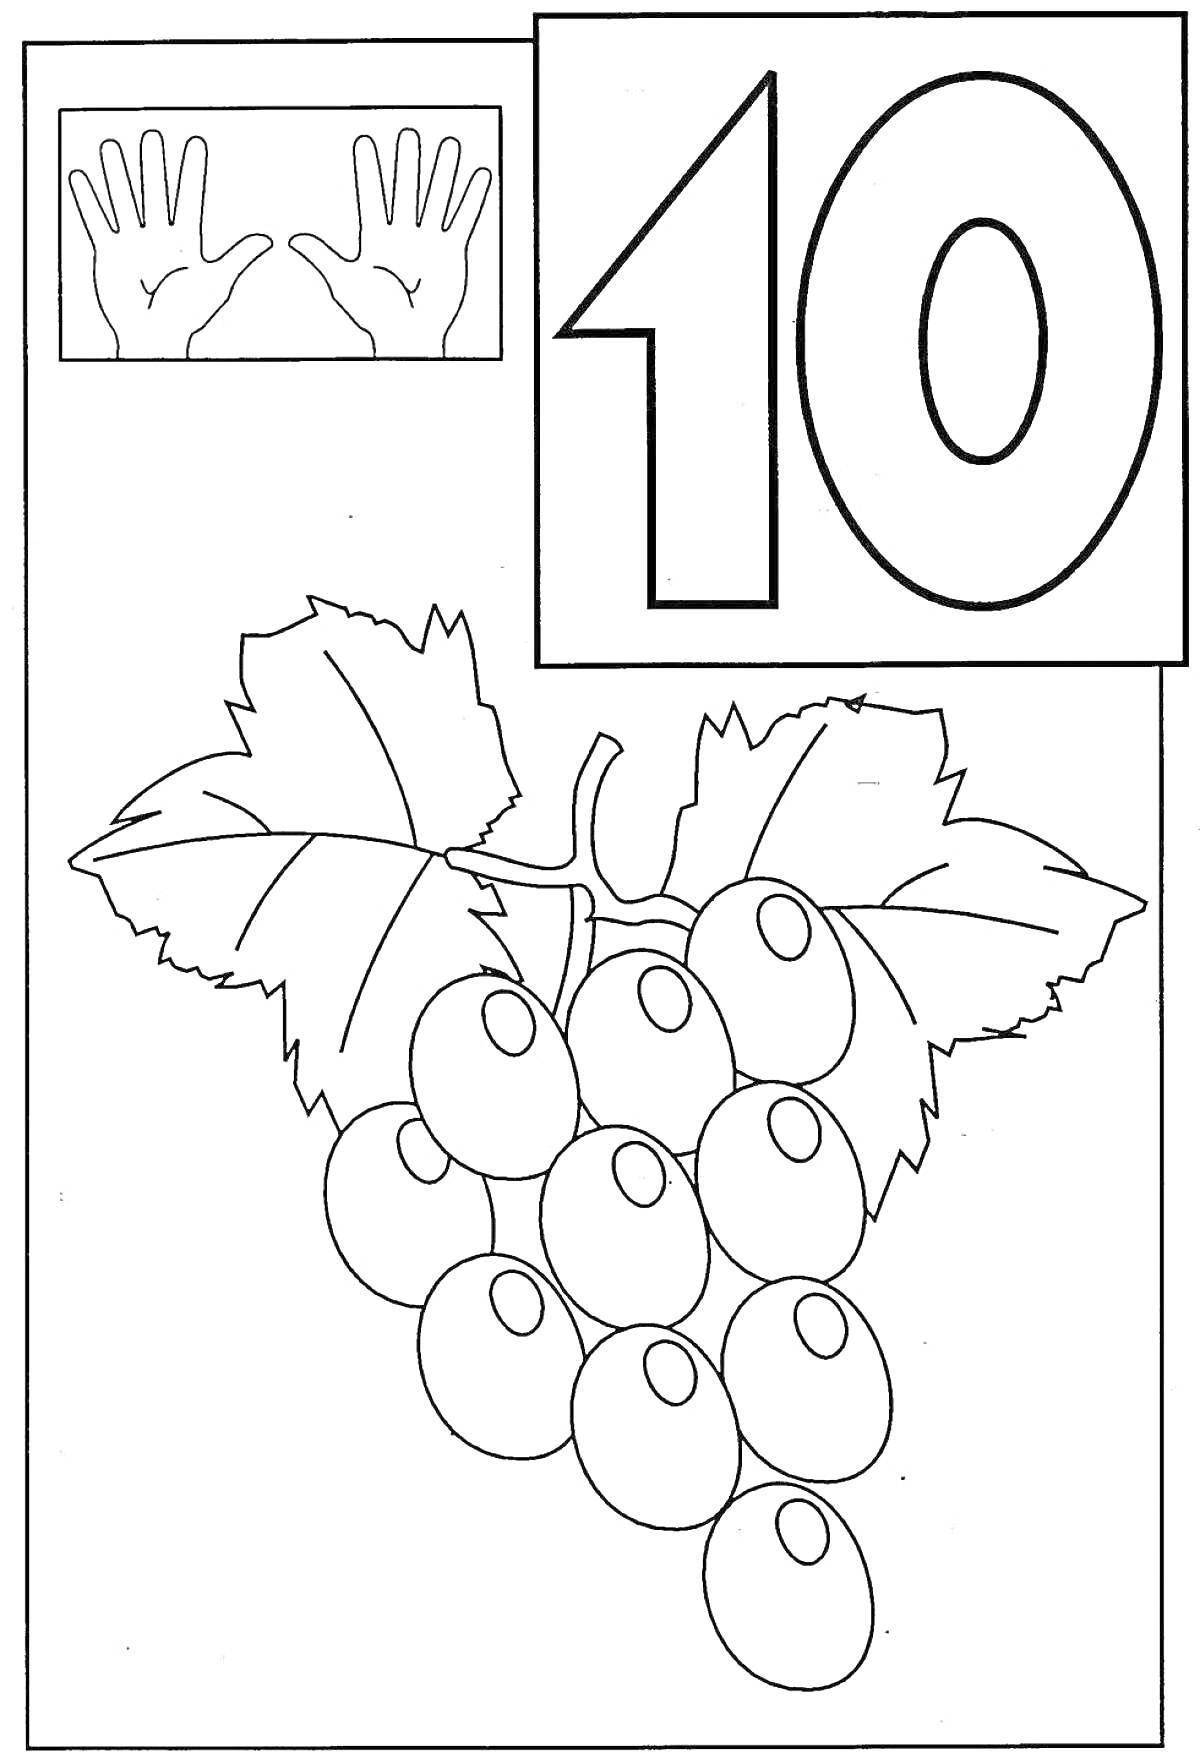 На раскраске изображено: Виноград, Листья, Две руки, Обучение, Математика